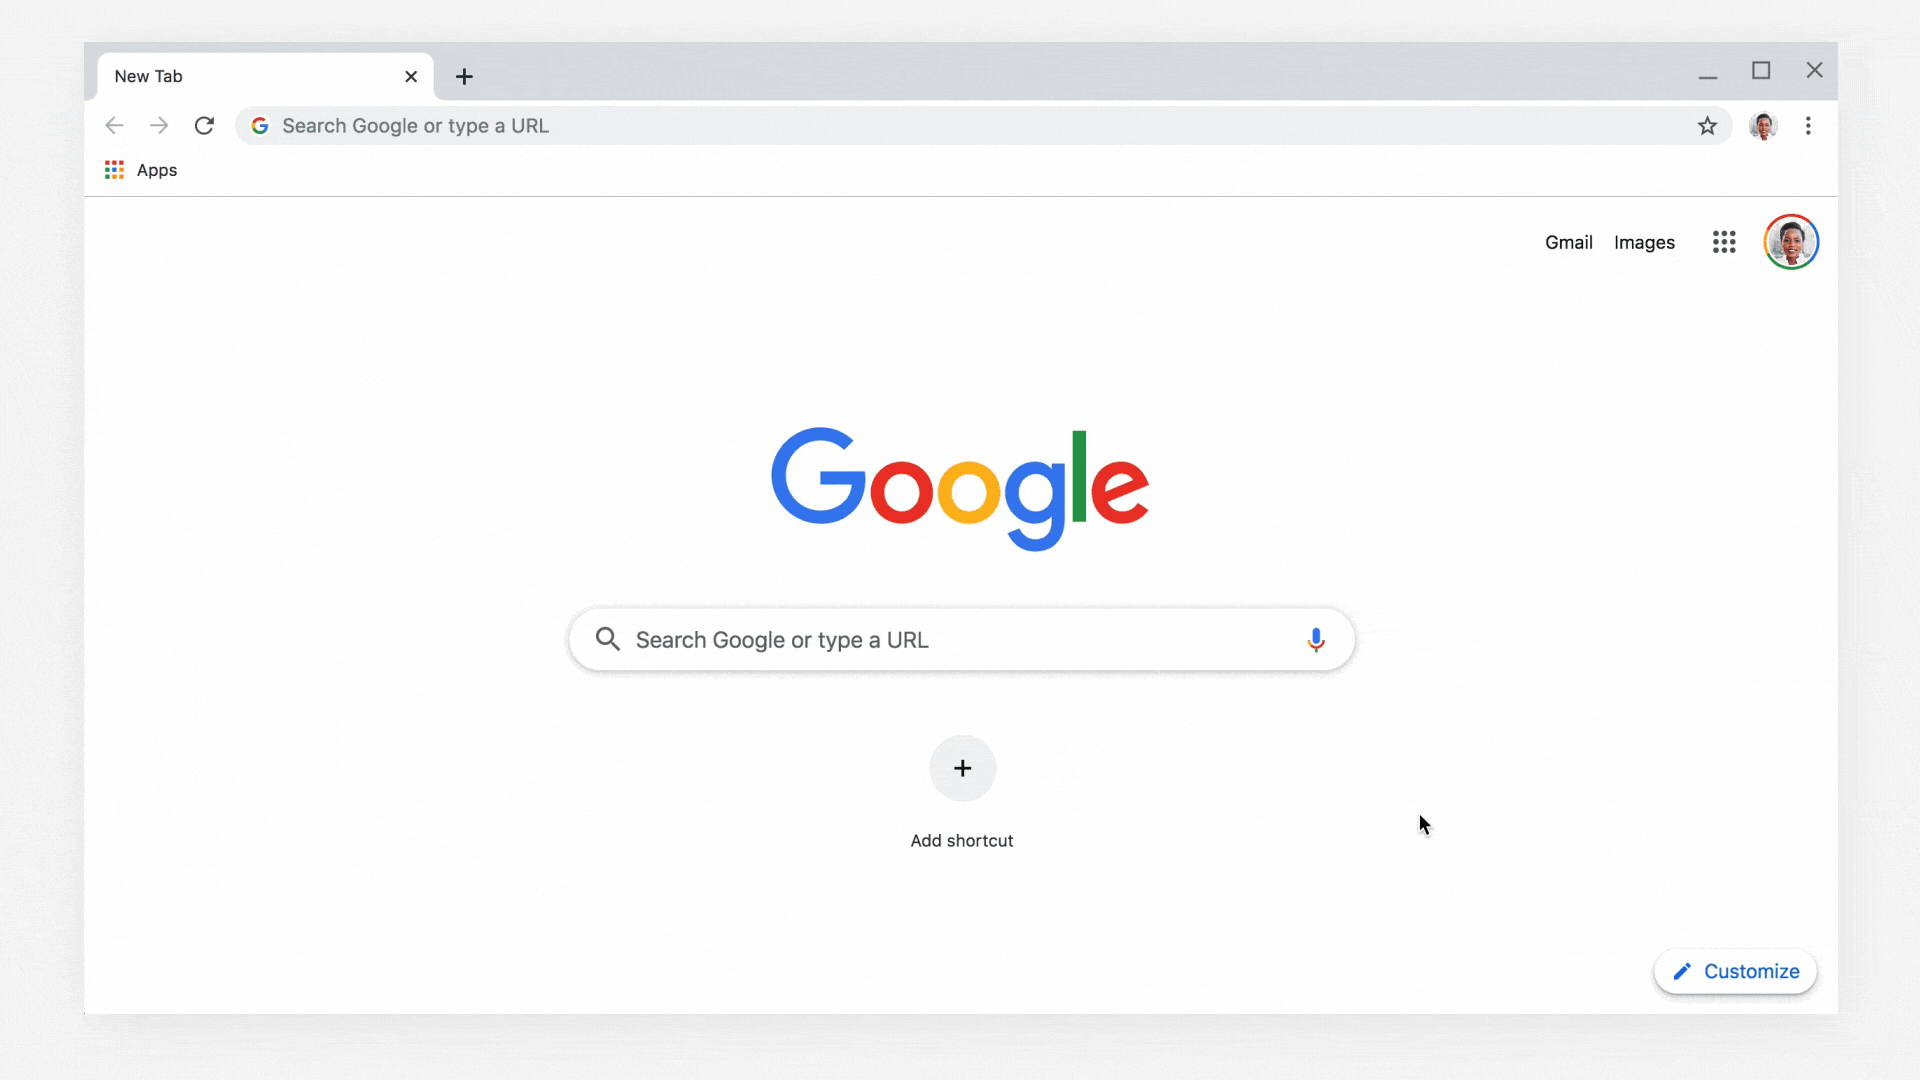 Google анонсировала новые функции в браузере Chrome